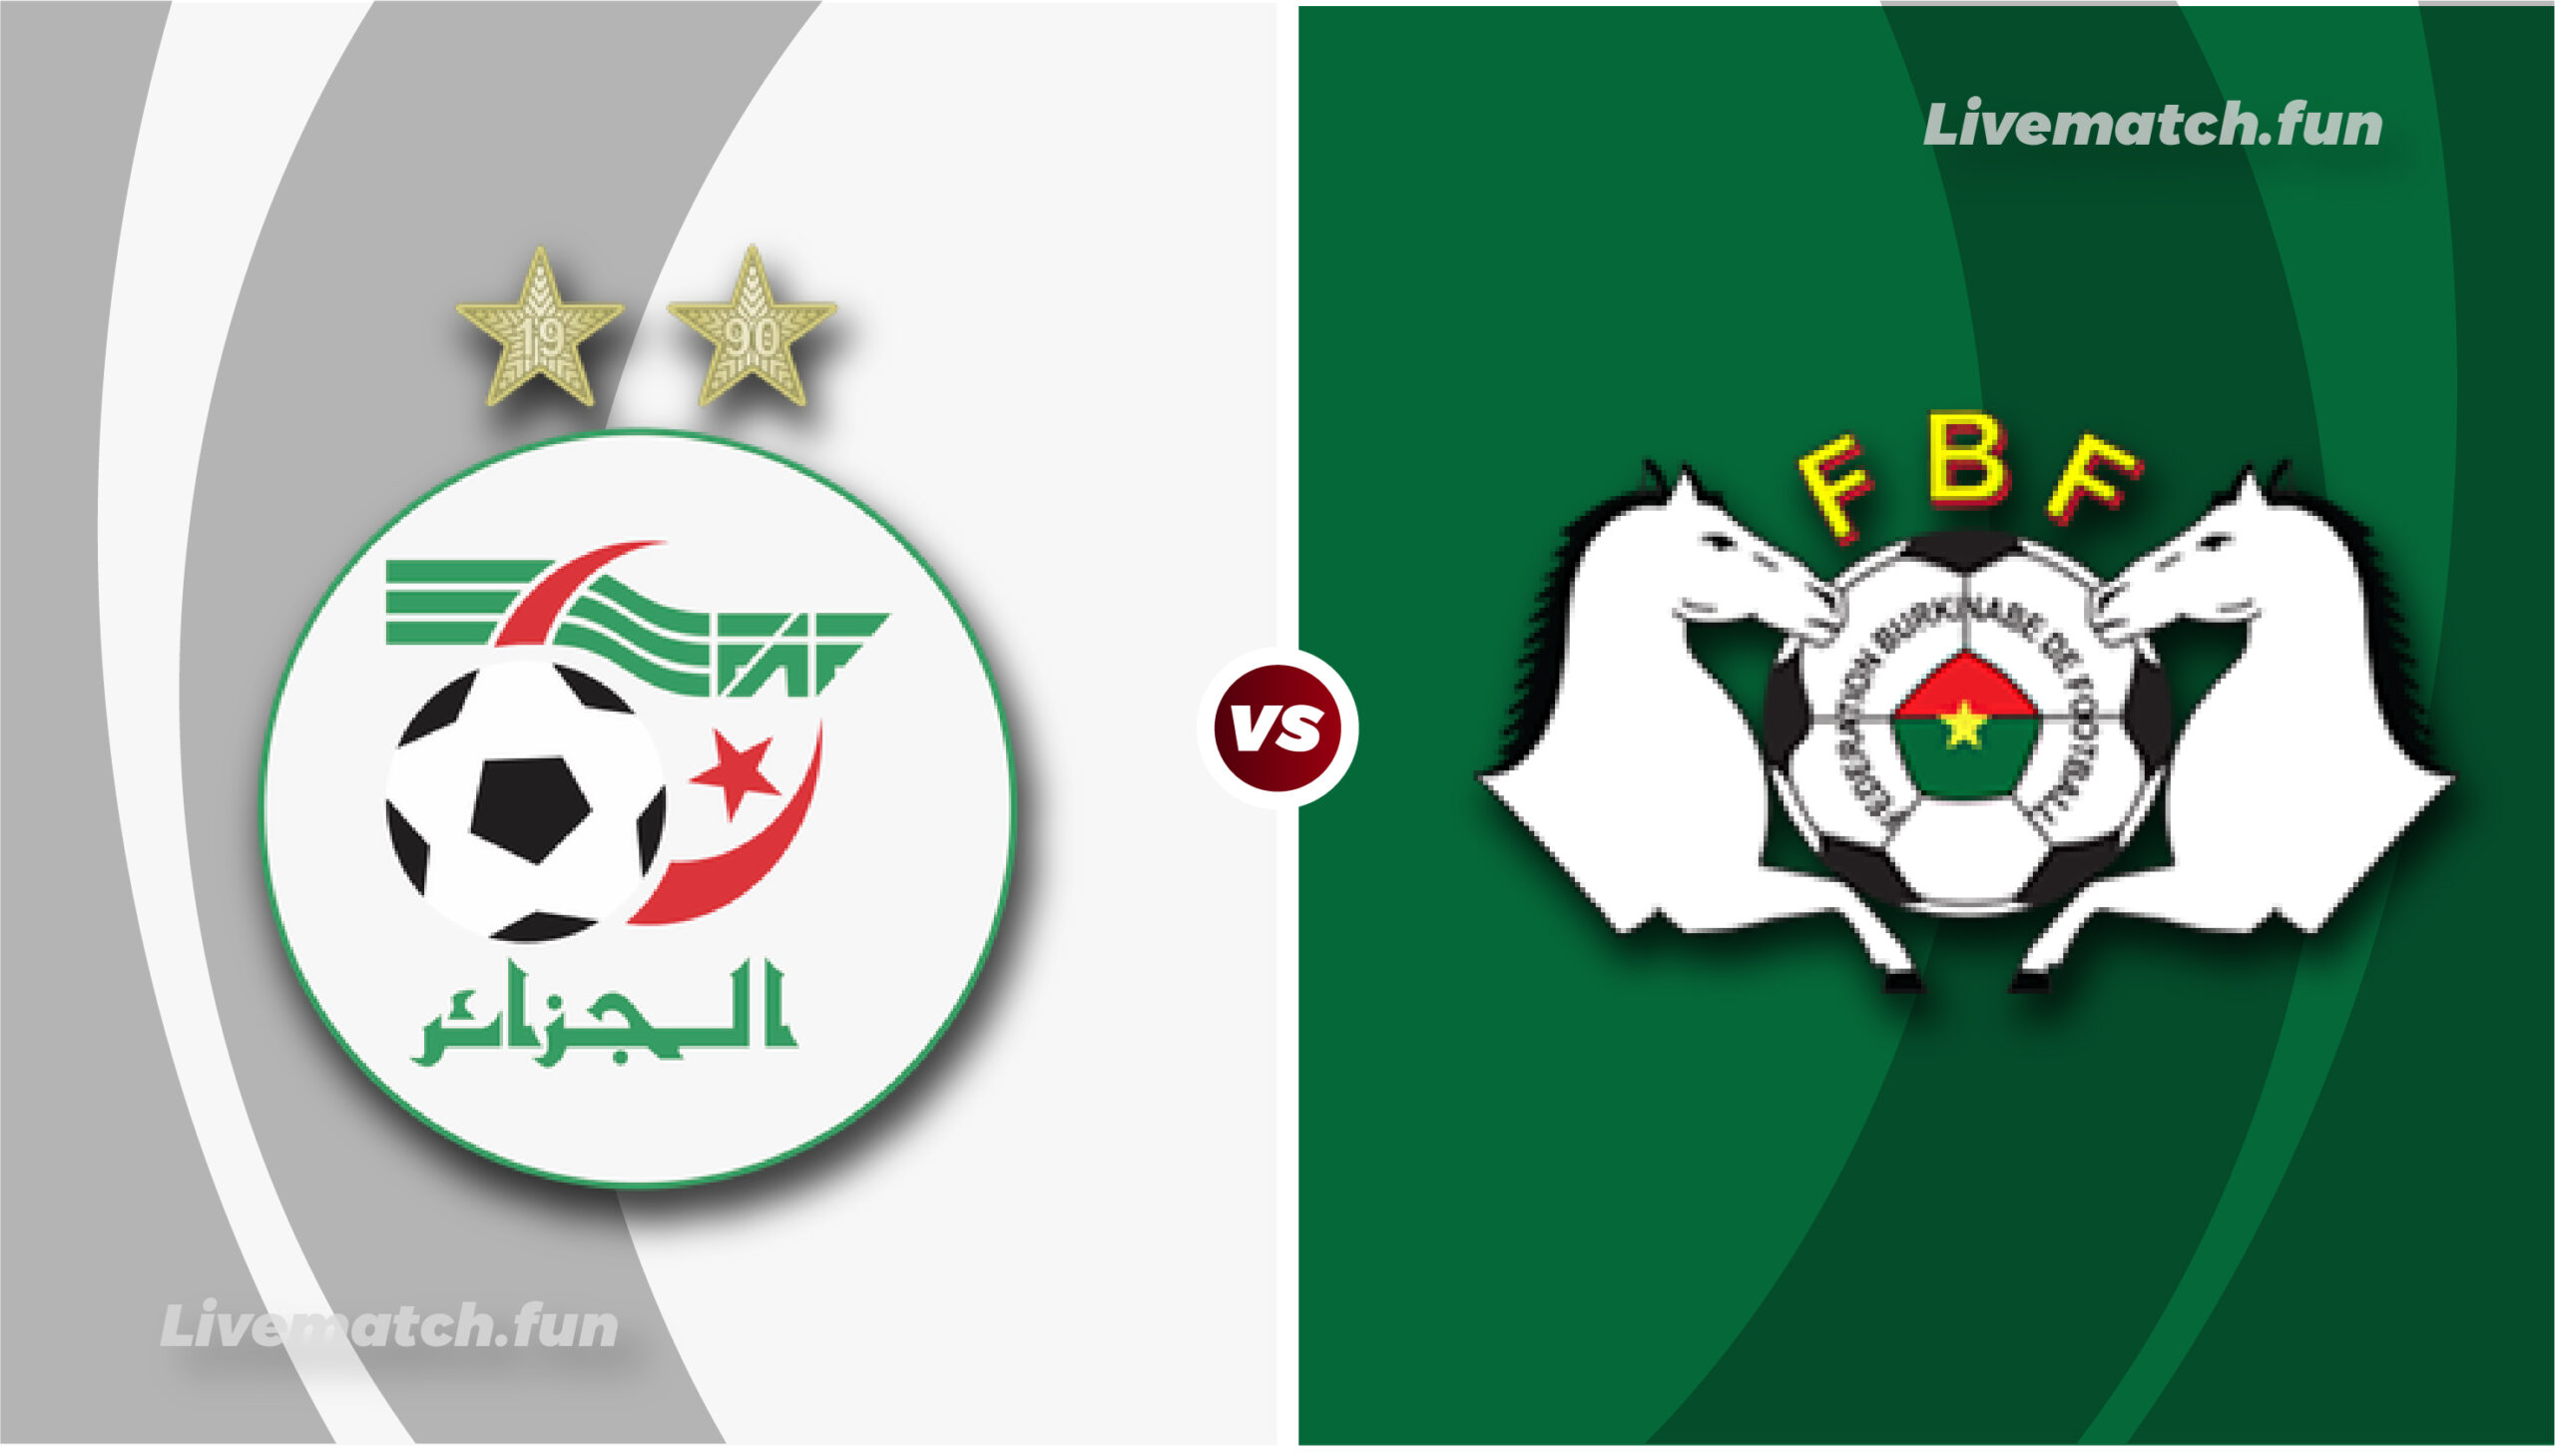 Algeria vs Burkina Faso